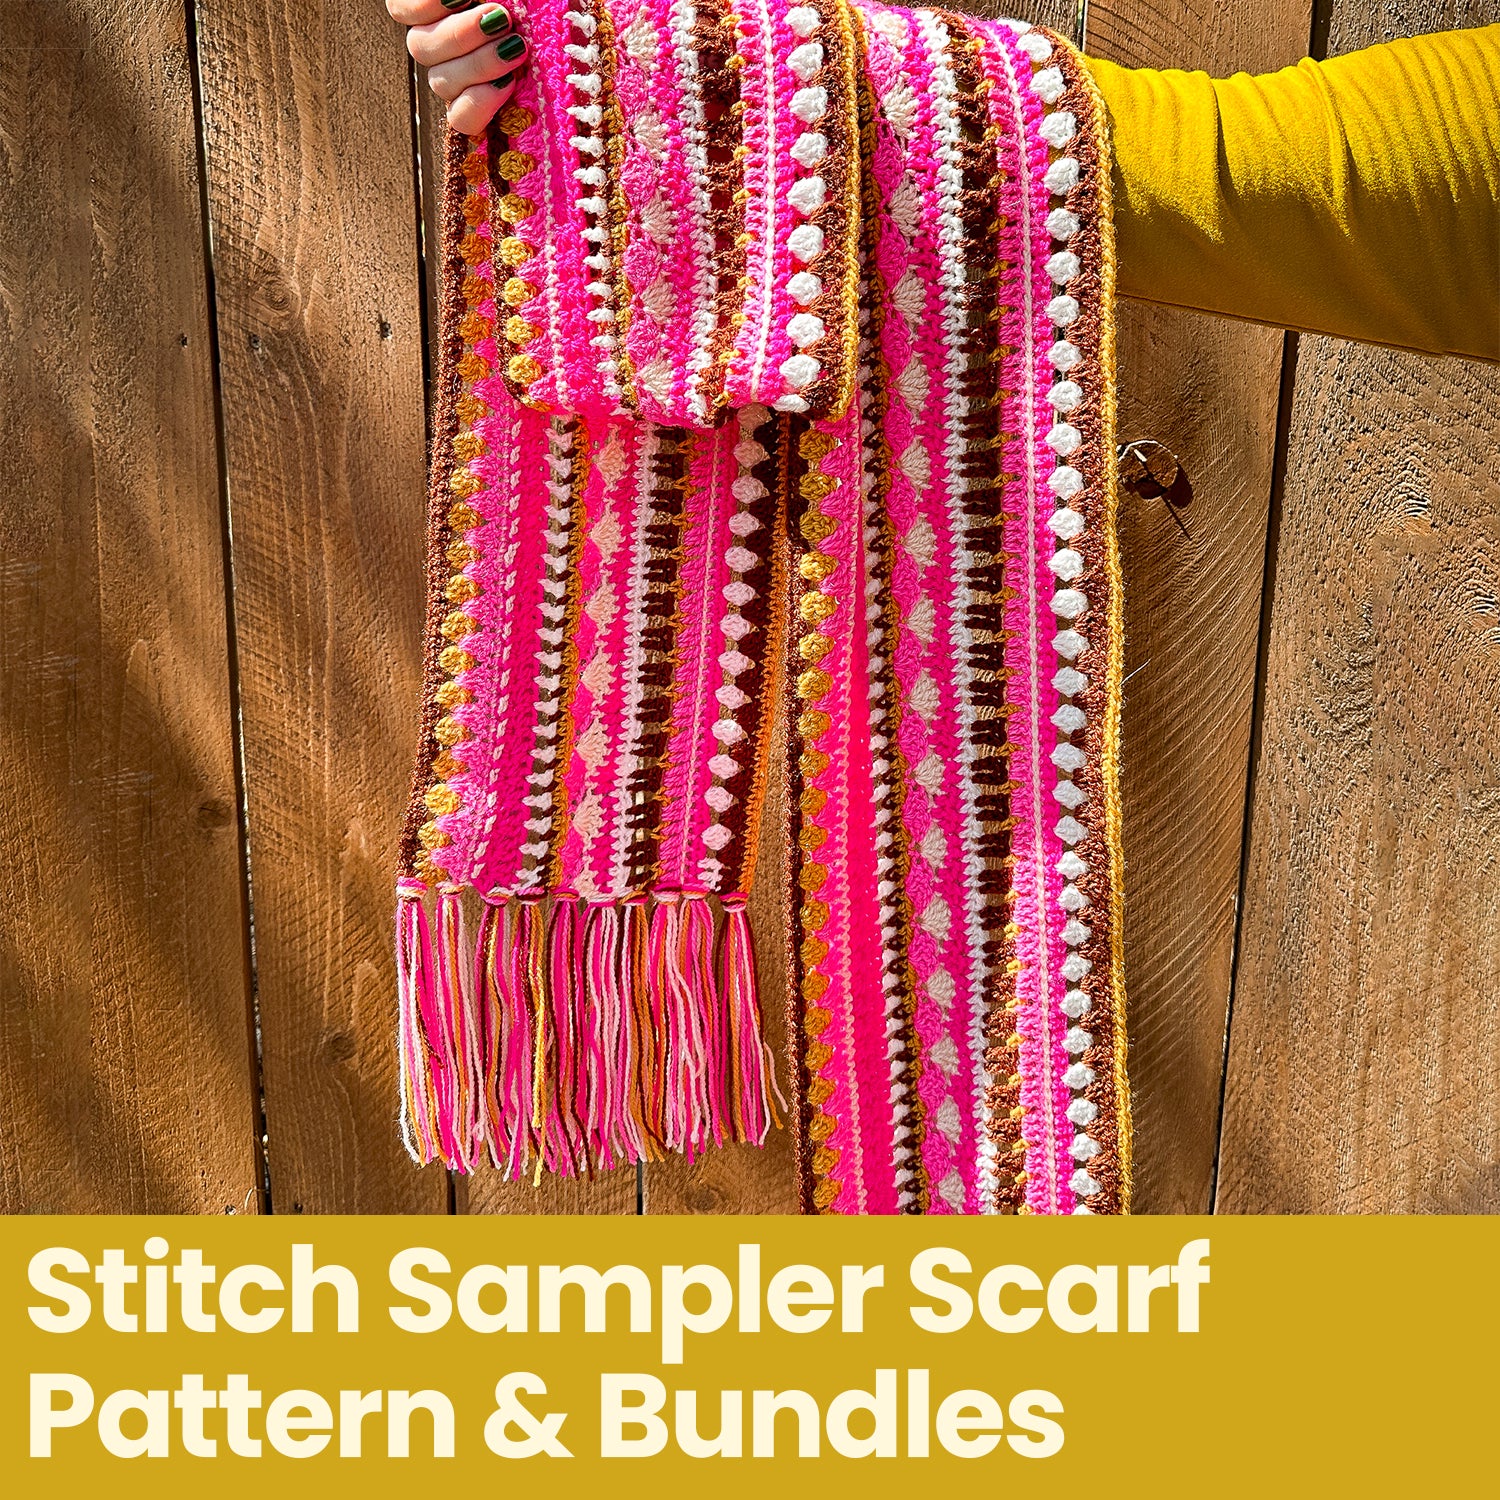 Stitch Sampler Scarf Crochet Pattern – The Neon Tea Party